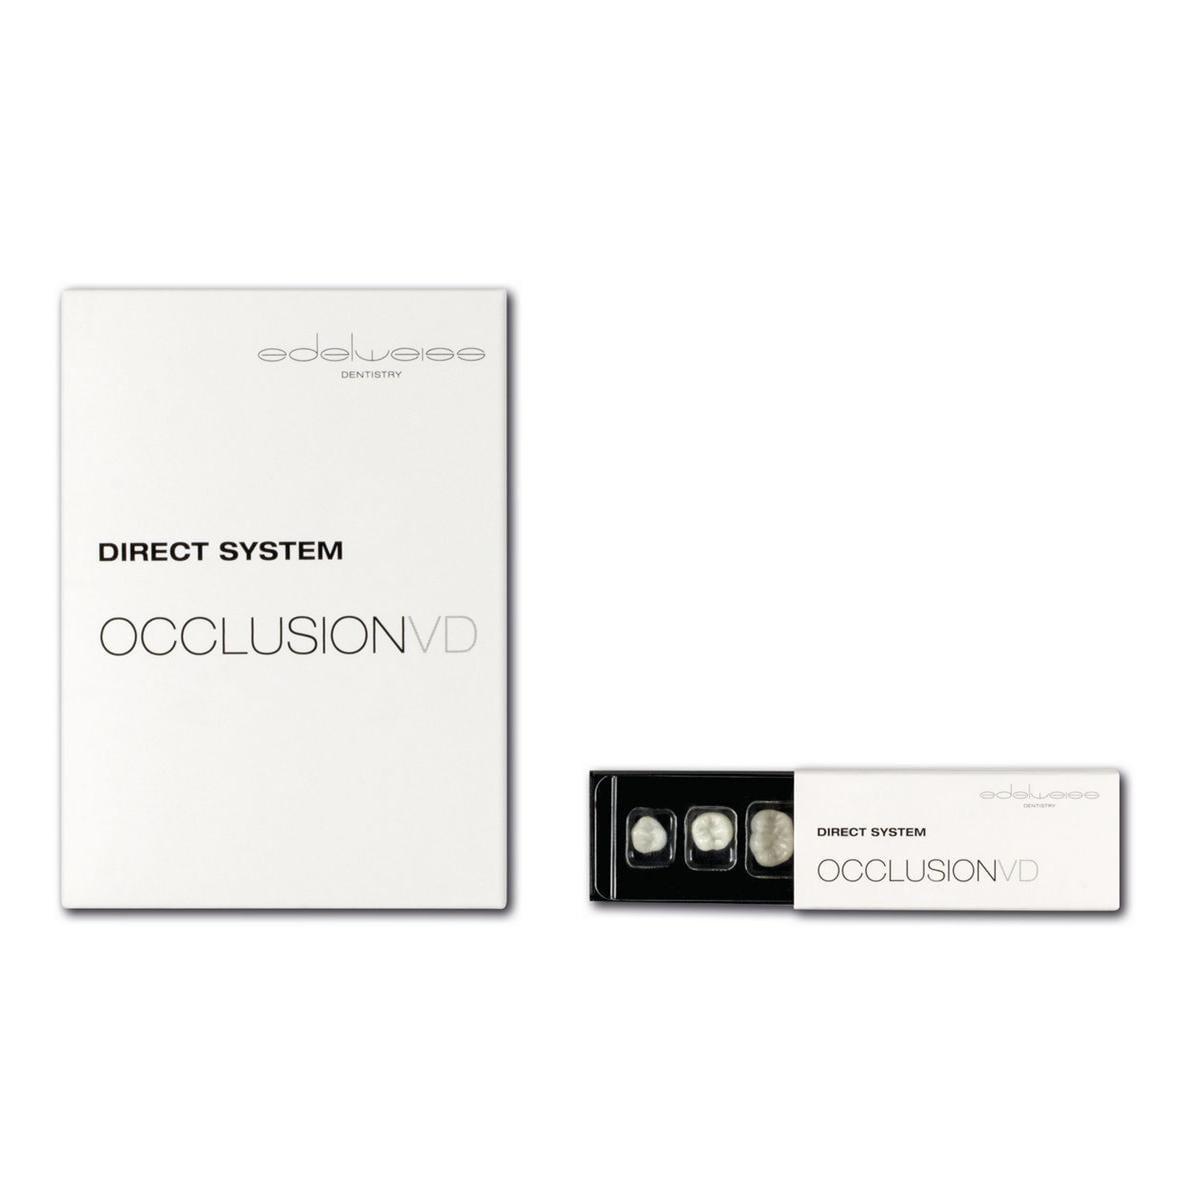 Direct System Occlusion-VD - Case - UK 34 - 37, Größe S, Packung 4 Stück